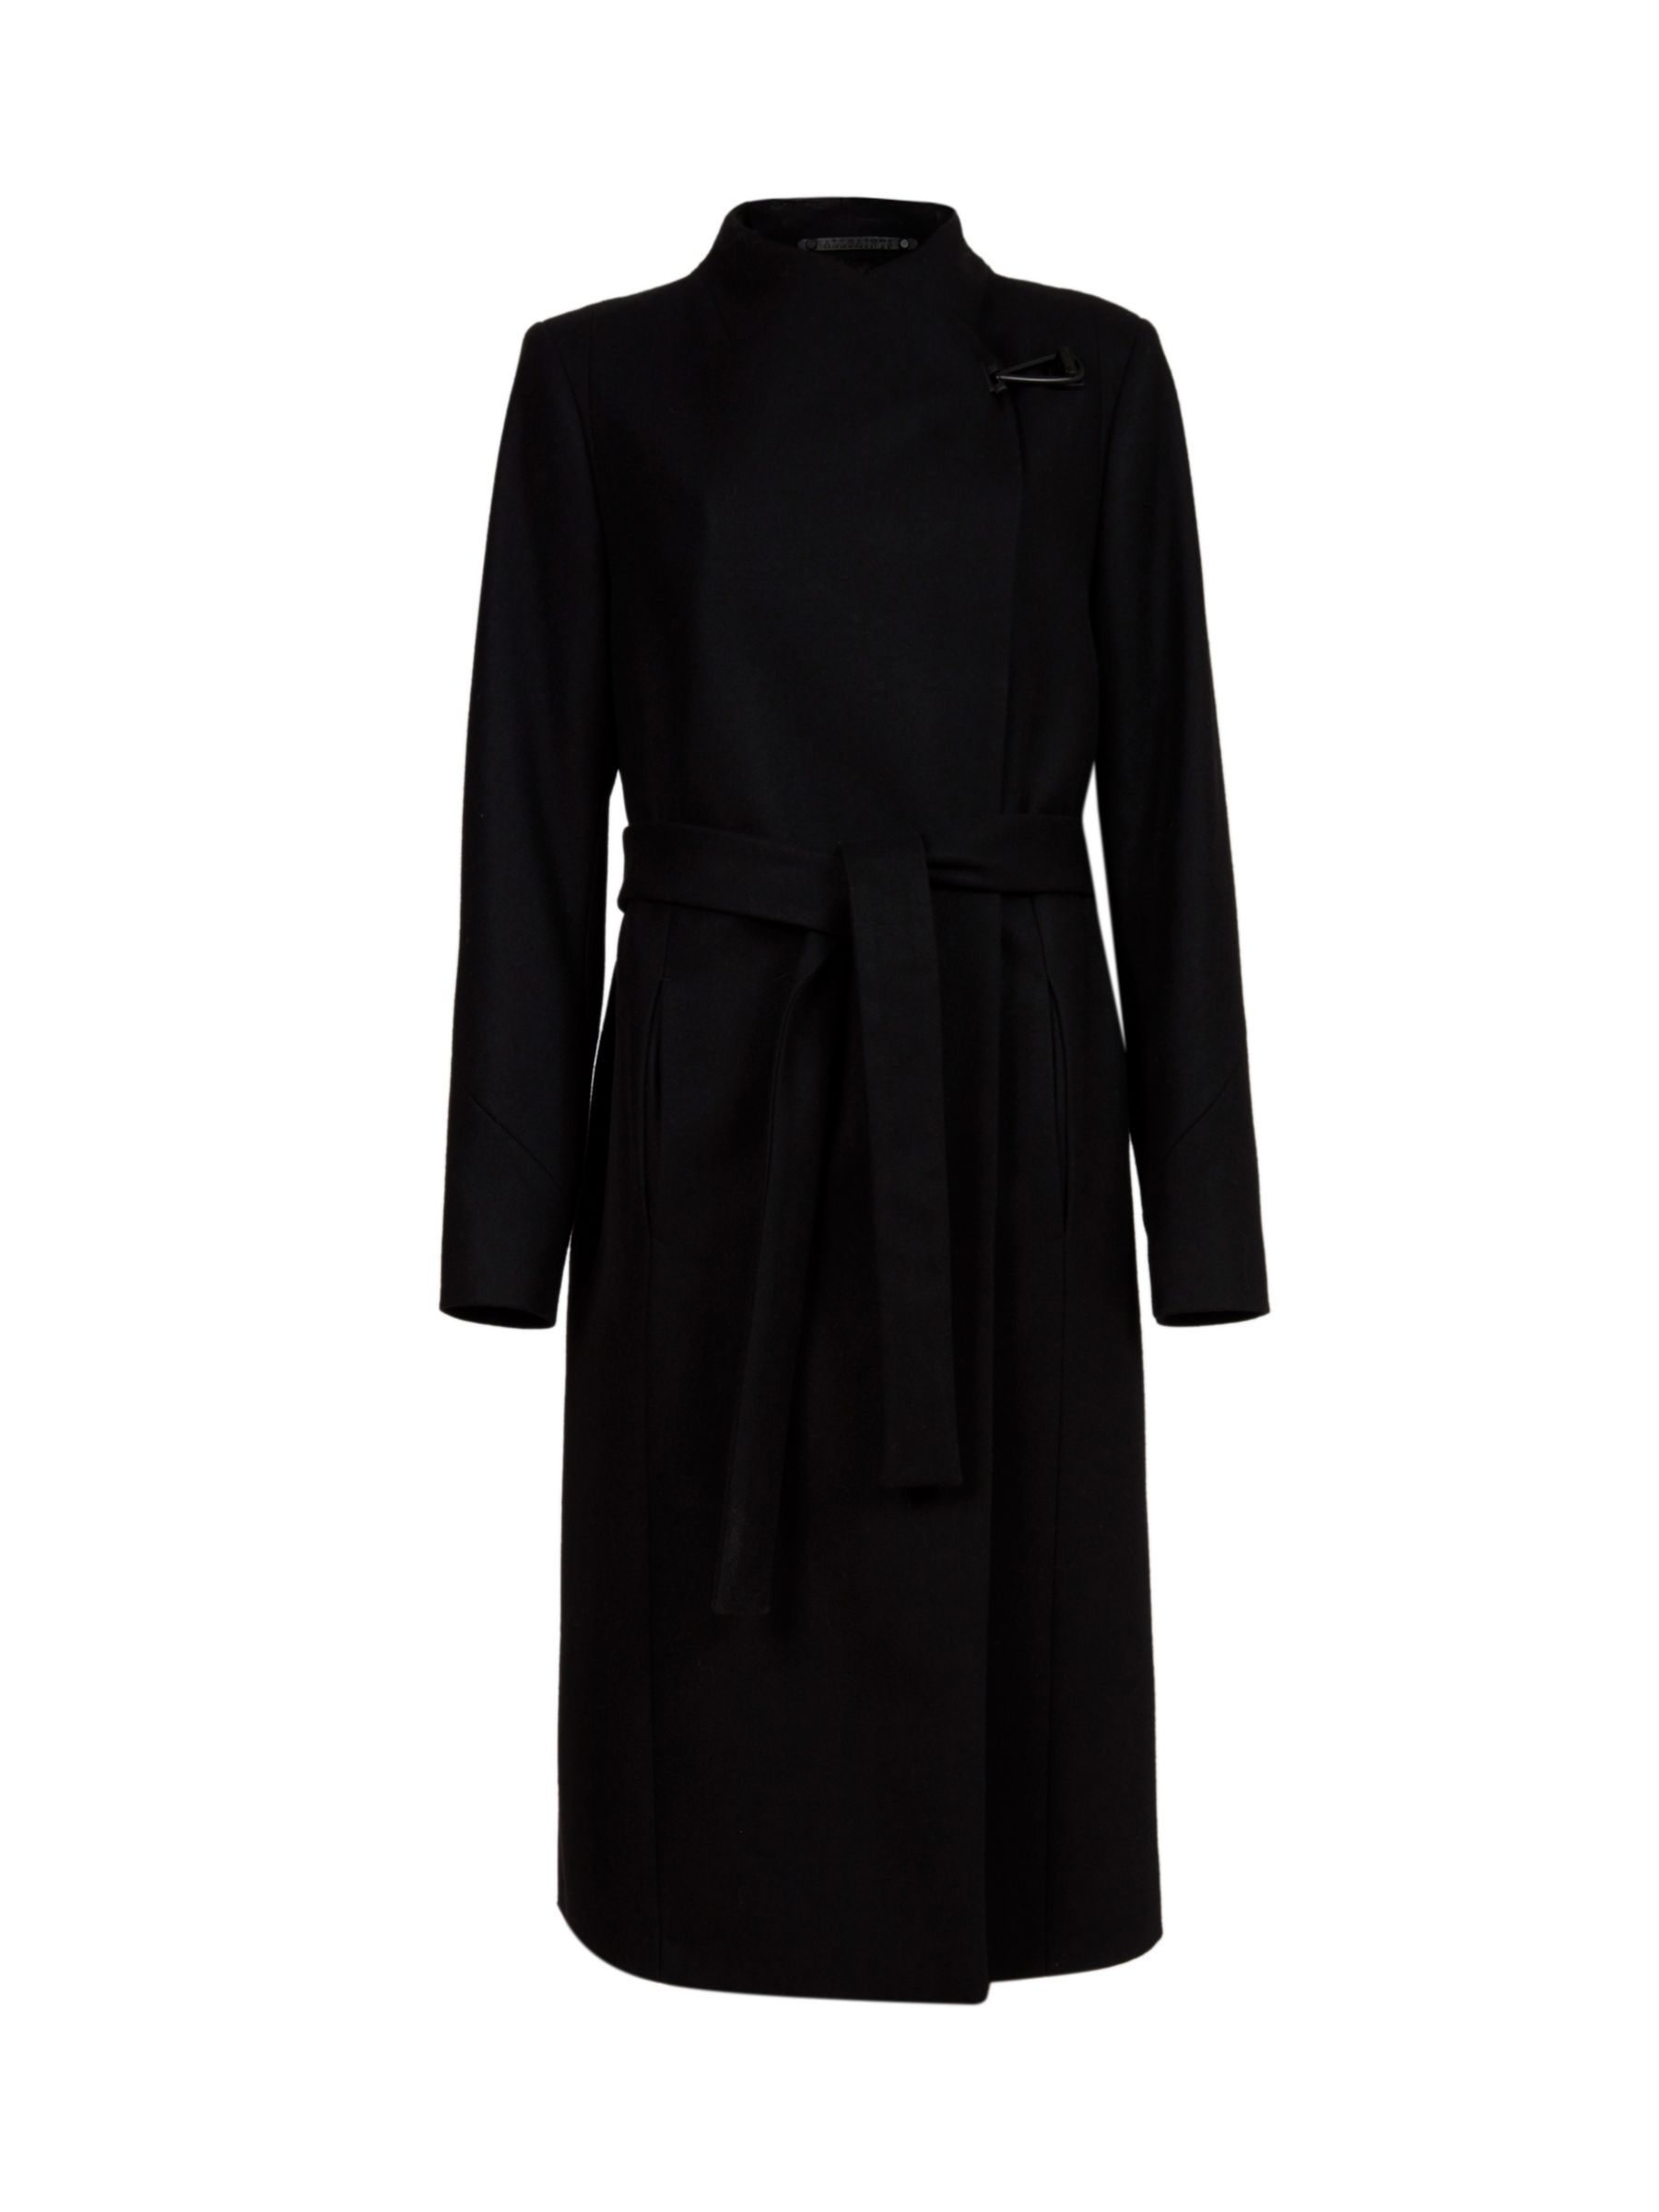 AllSaints Riley Cashmere Blend Coat, Black at John Lewis & Partners